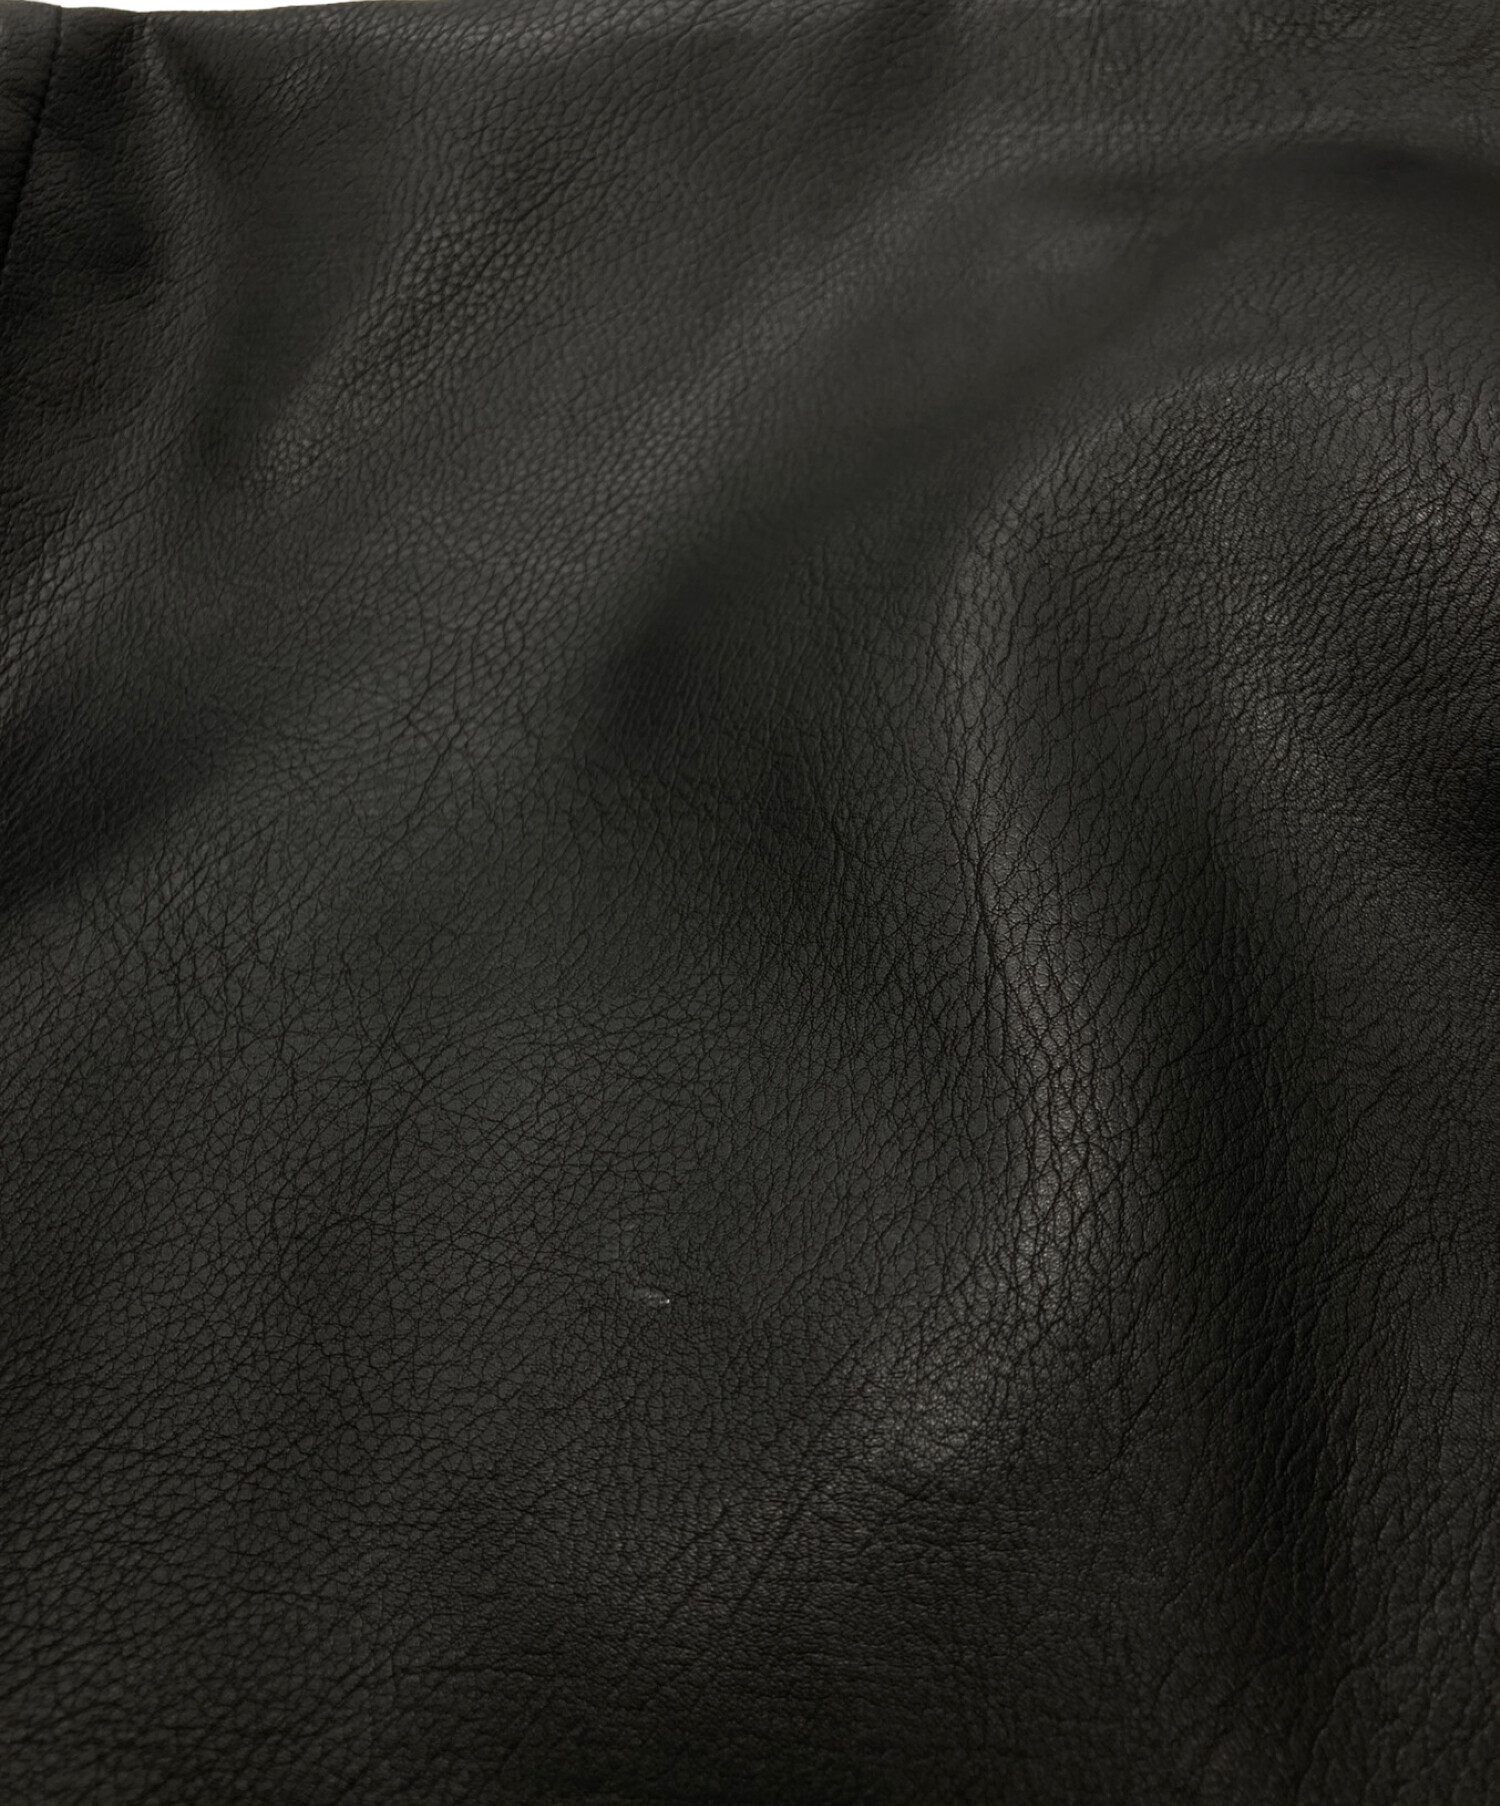 NAUTICA (ノーティカ) Vegan Leather Jacket ブラック サイズ:XL